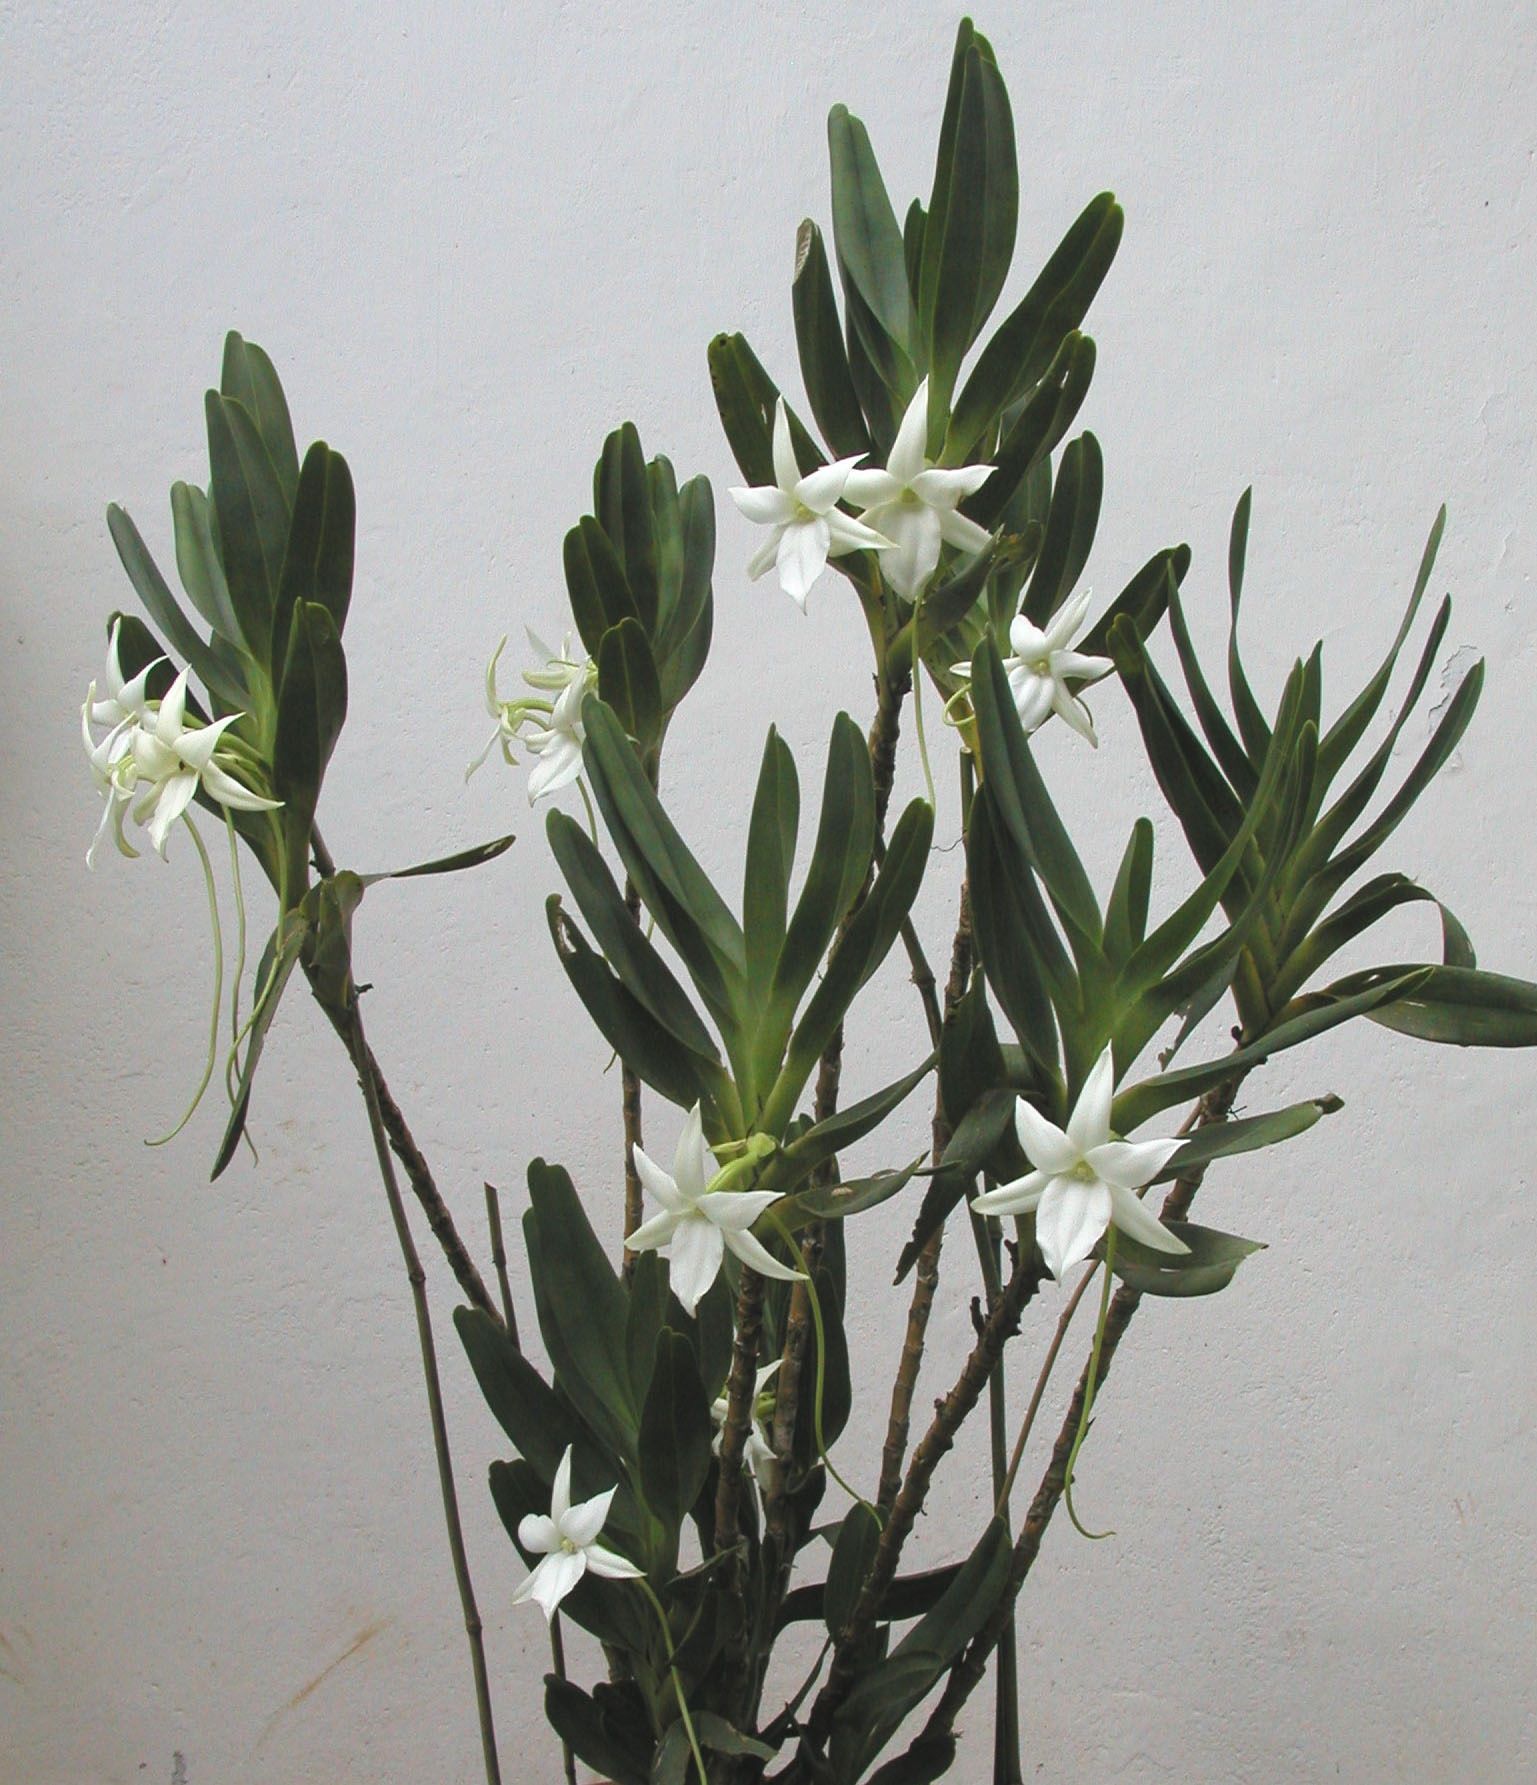 http://www.orchidspecies.com/orphotdir/angraesororium.jpg